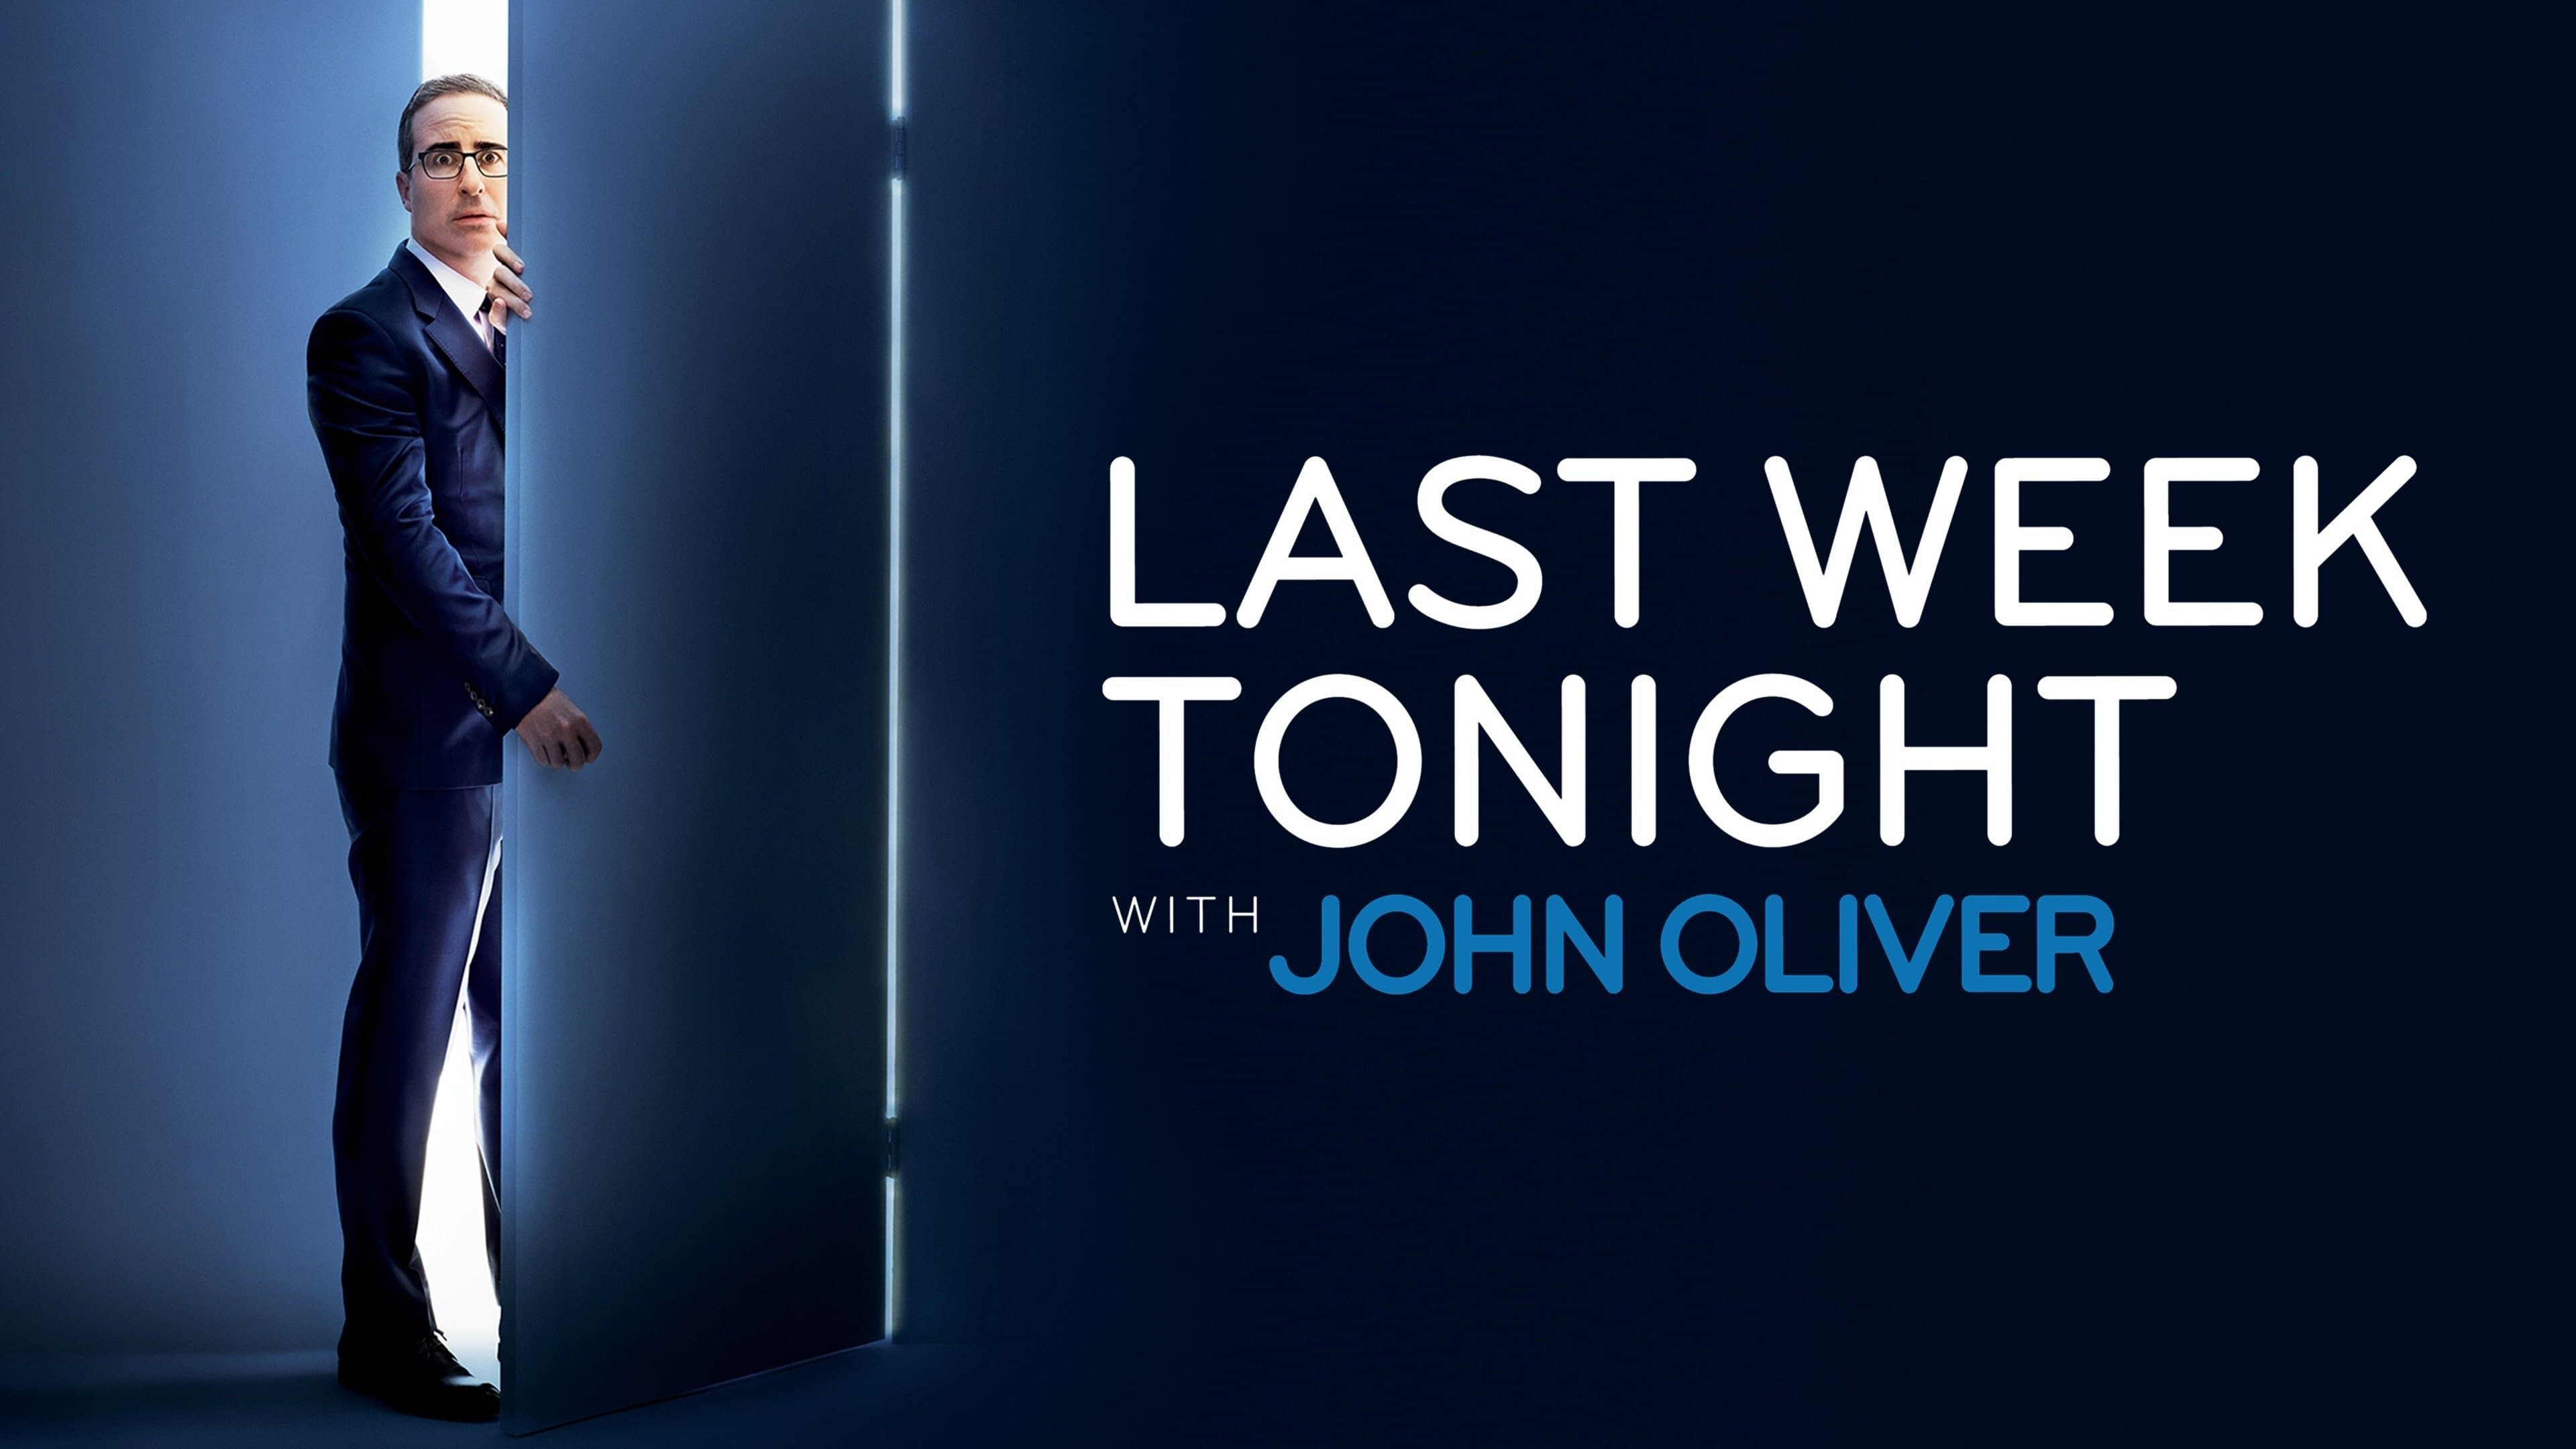 Last Week Tonight with John Oliver - Season 10 Episode 16